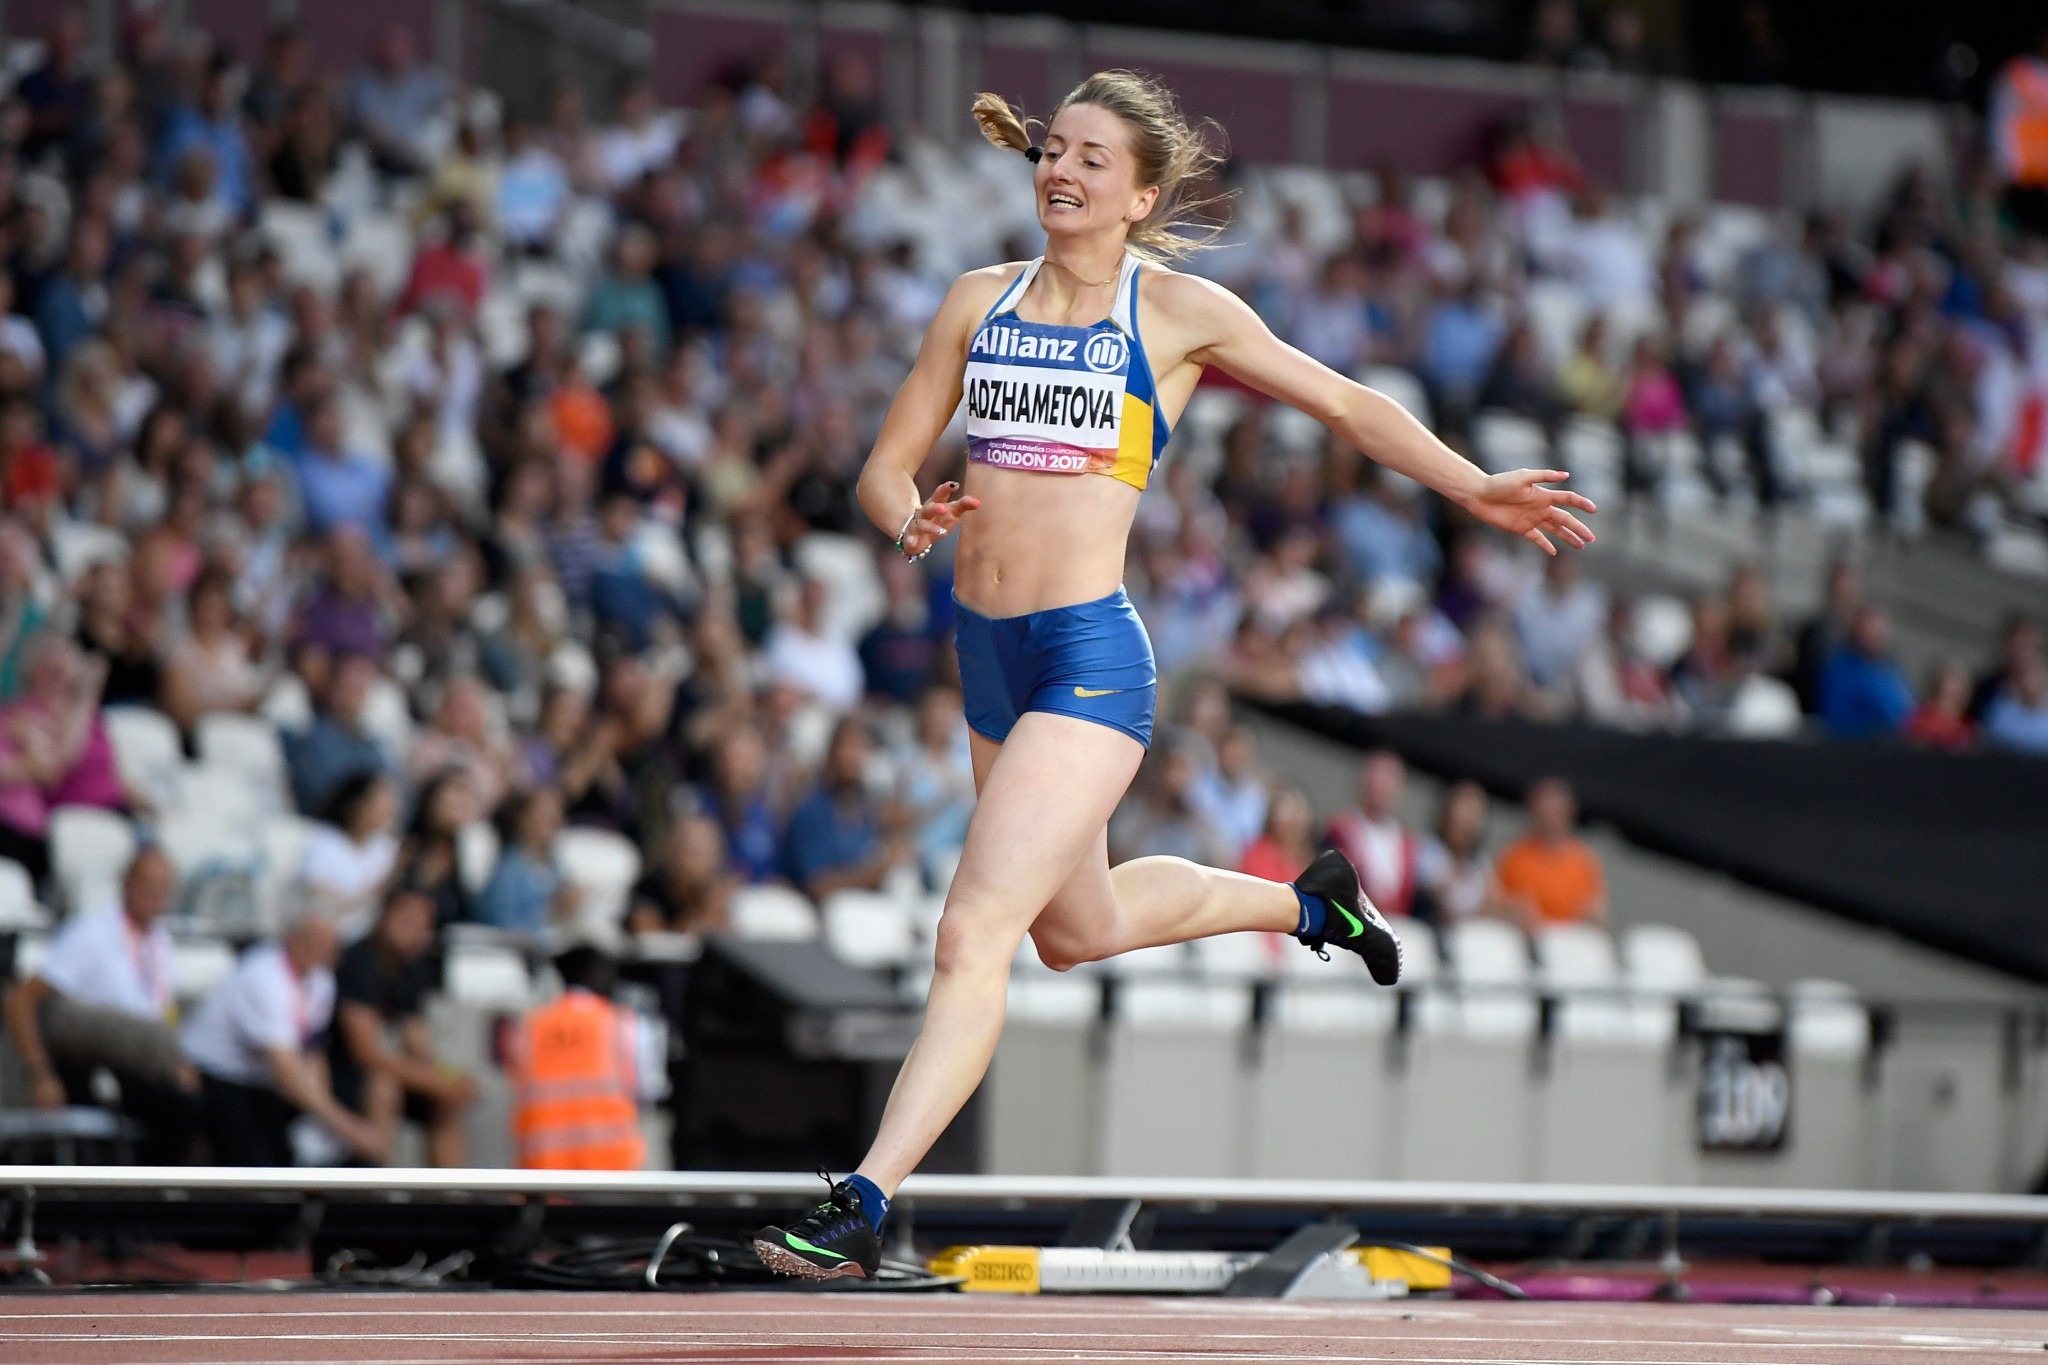 Ukraine's Leilia Adzhametova won the women's 100m T13 event ©Getty Images